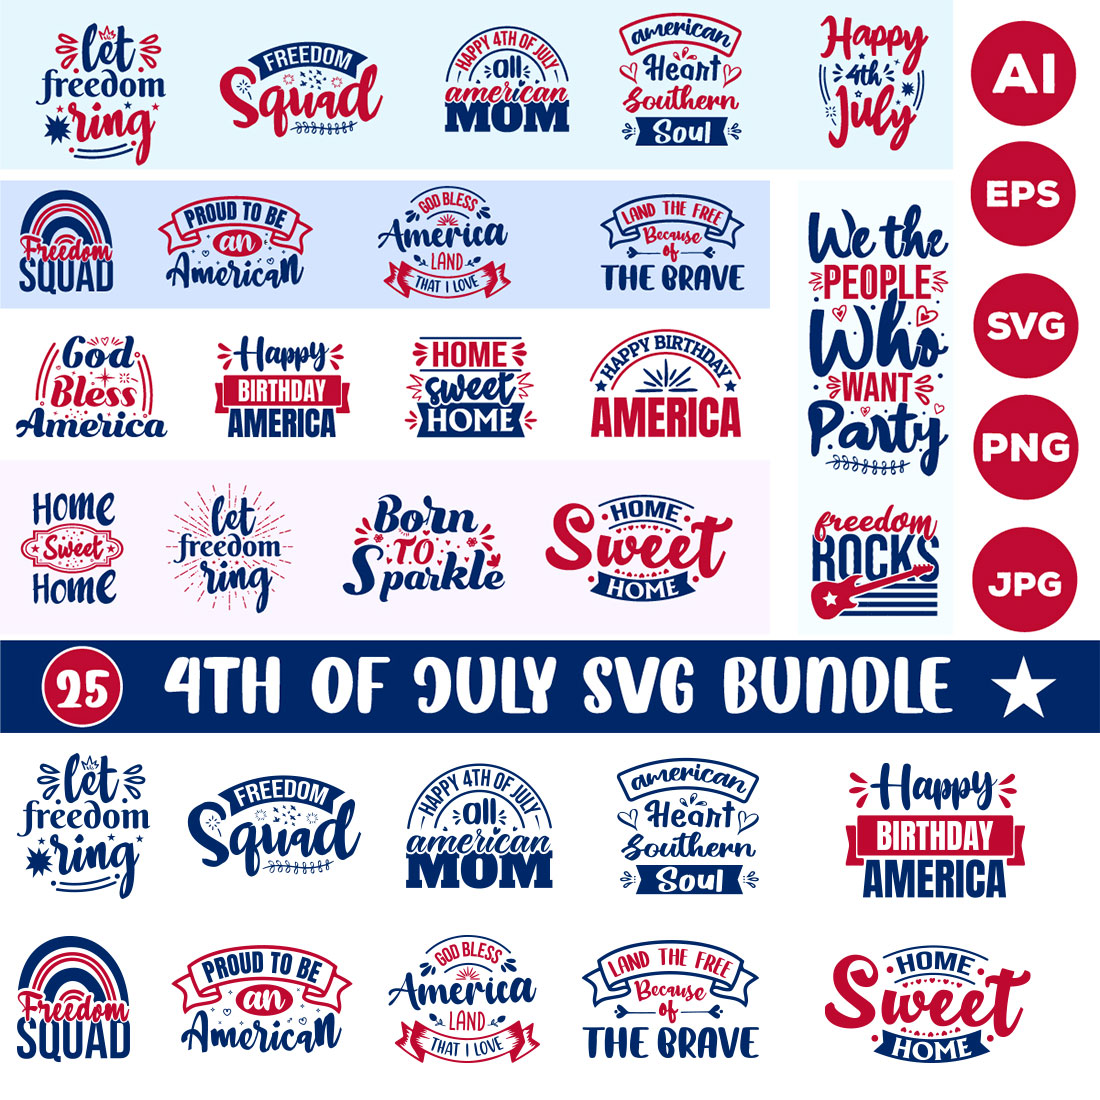 4th of July SVG Bundle cover image.